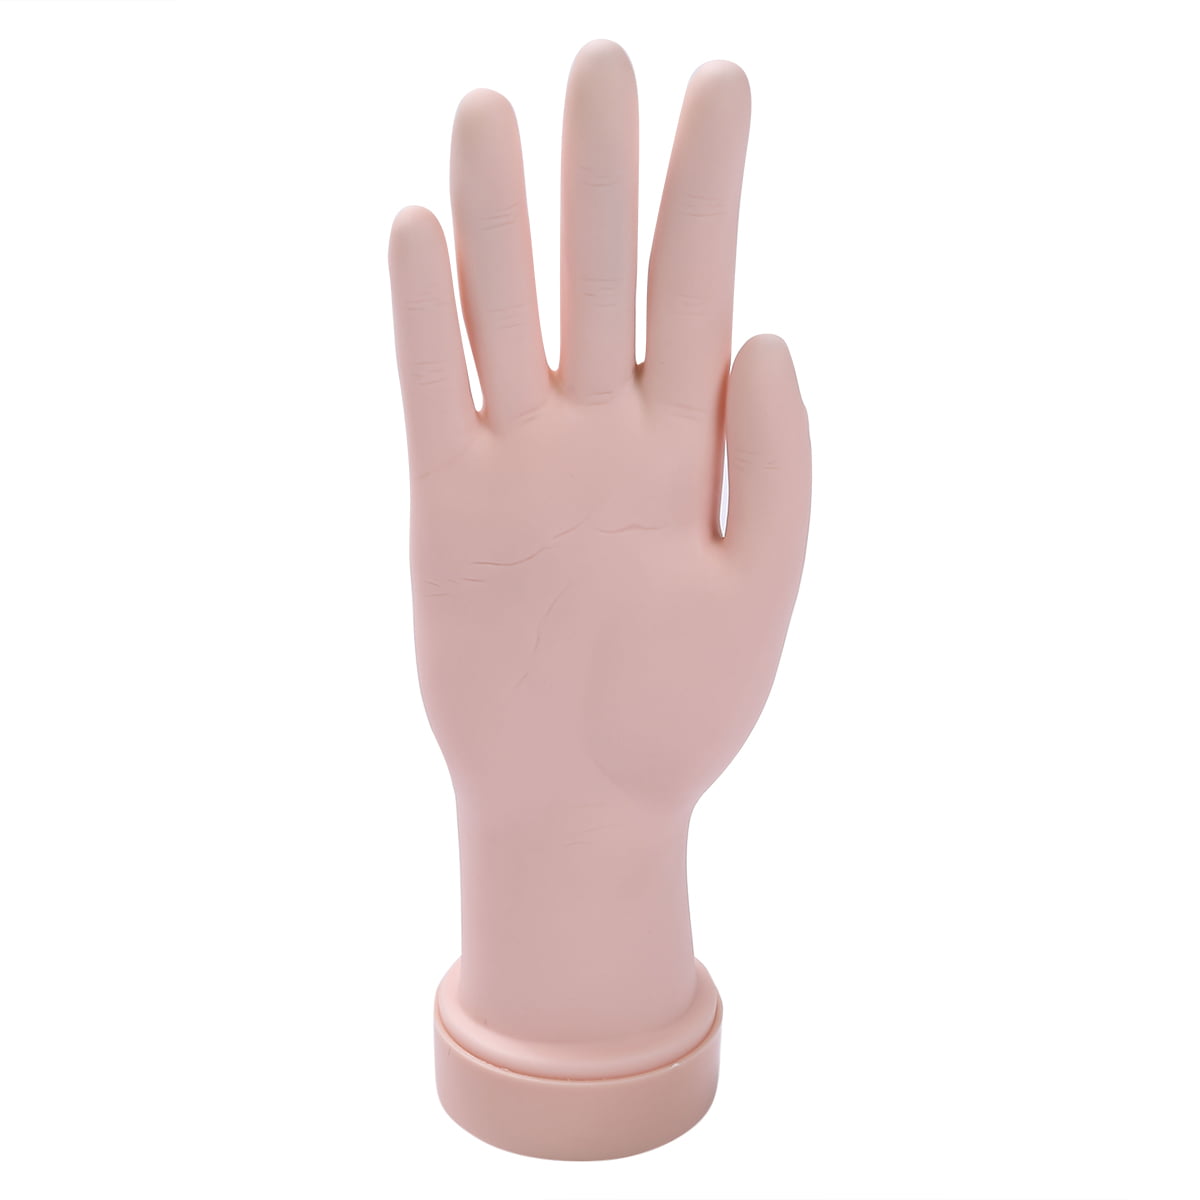 Multitrust nail practice hand model reusable soft model hand - Walmart.com